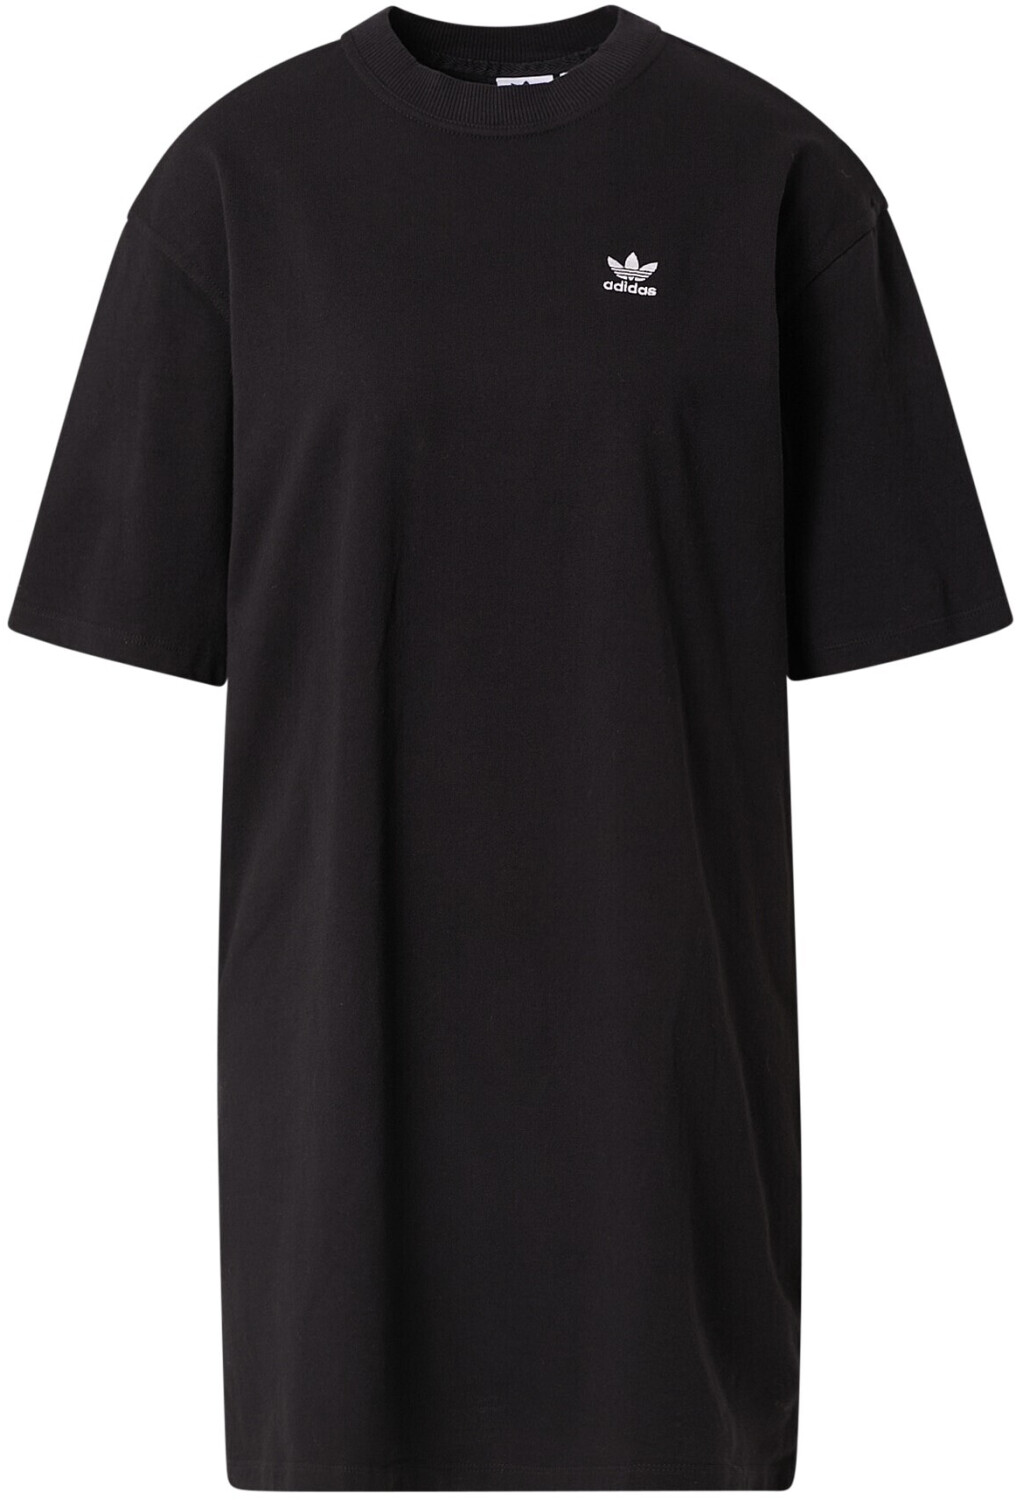 – Best (Today) Dress Big Buy on T-Shirt Classics Adidas from £14.99 Originals Deals Adicolor Trefoil